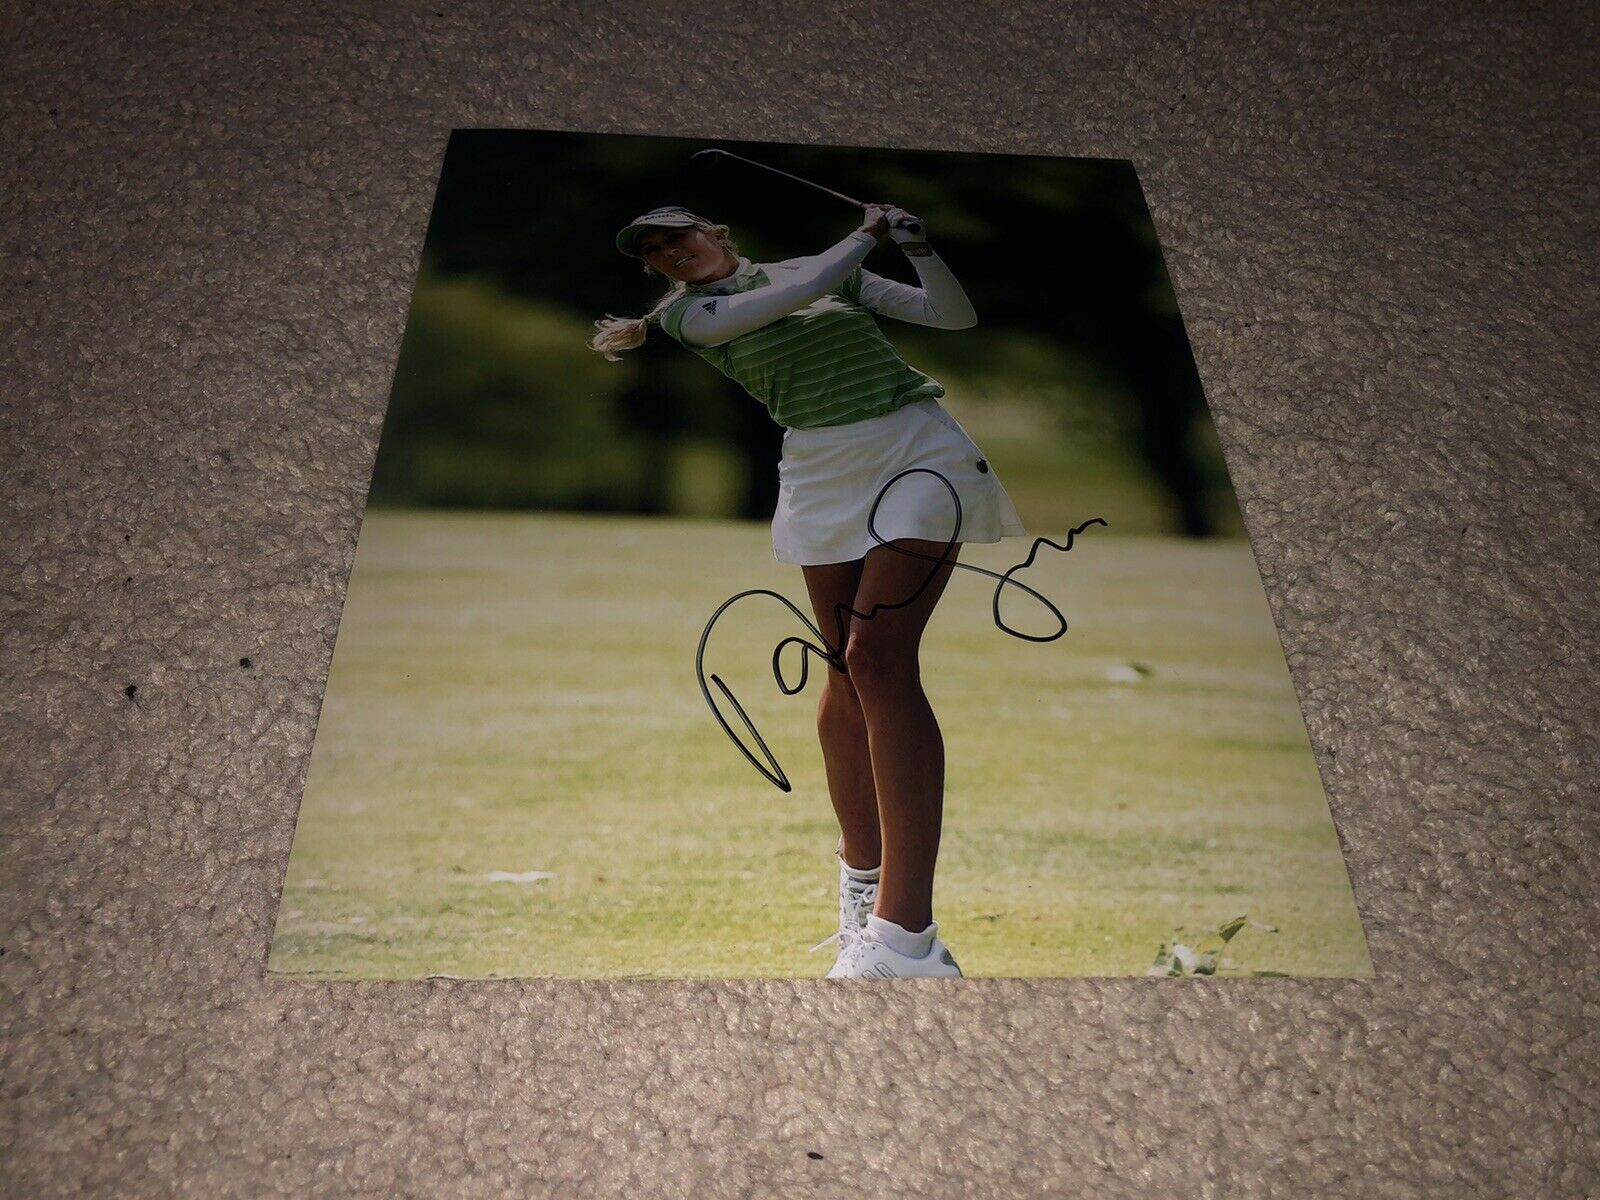 Lpga Golf Star Natalie Gulbis Signed Autographed 8x10 Photo Proof Coa